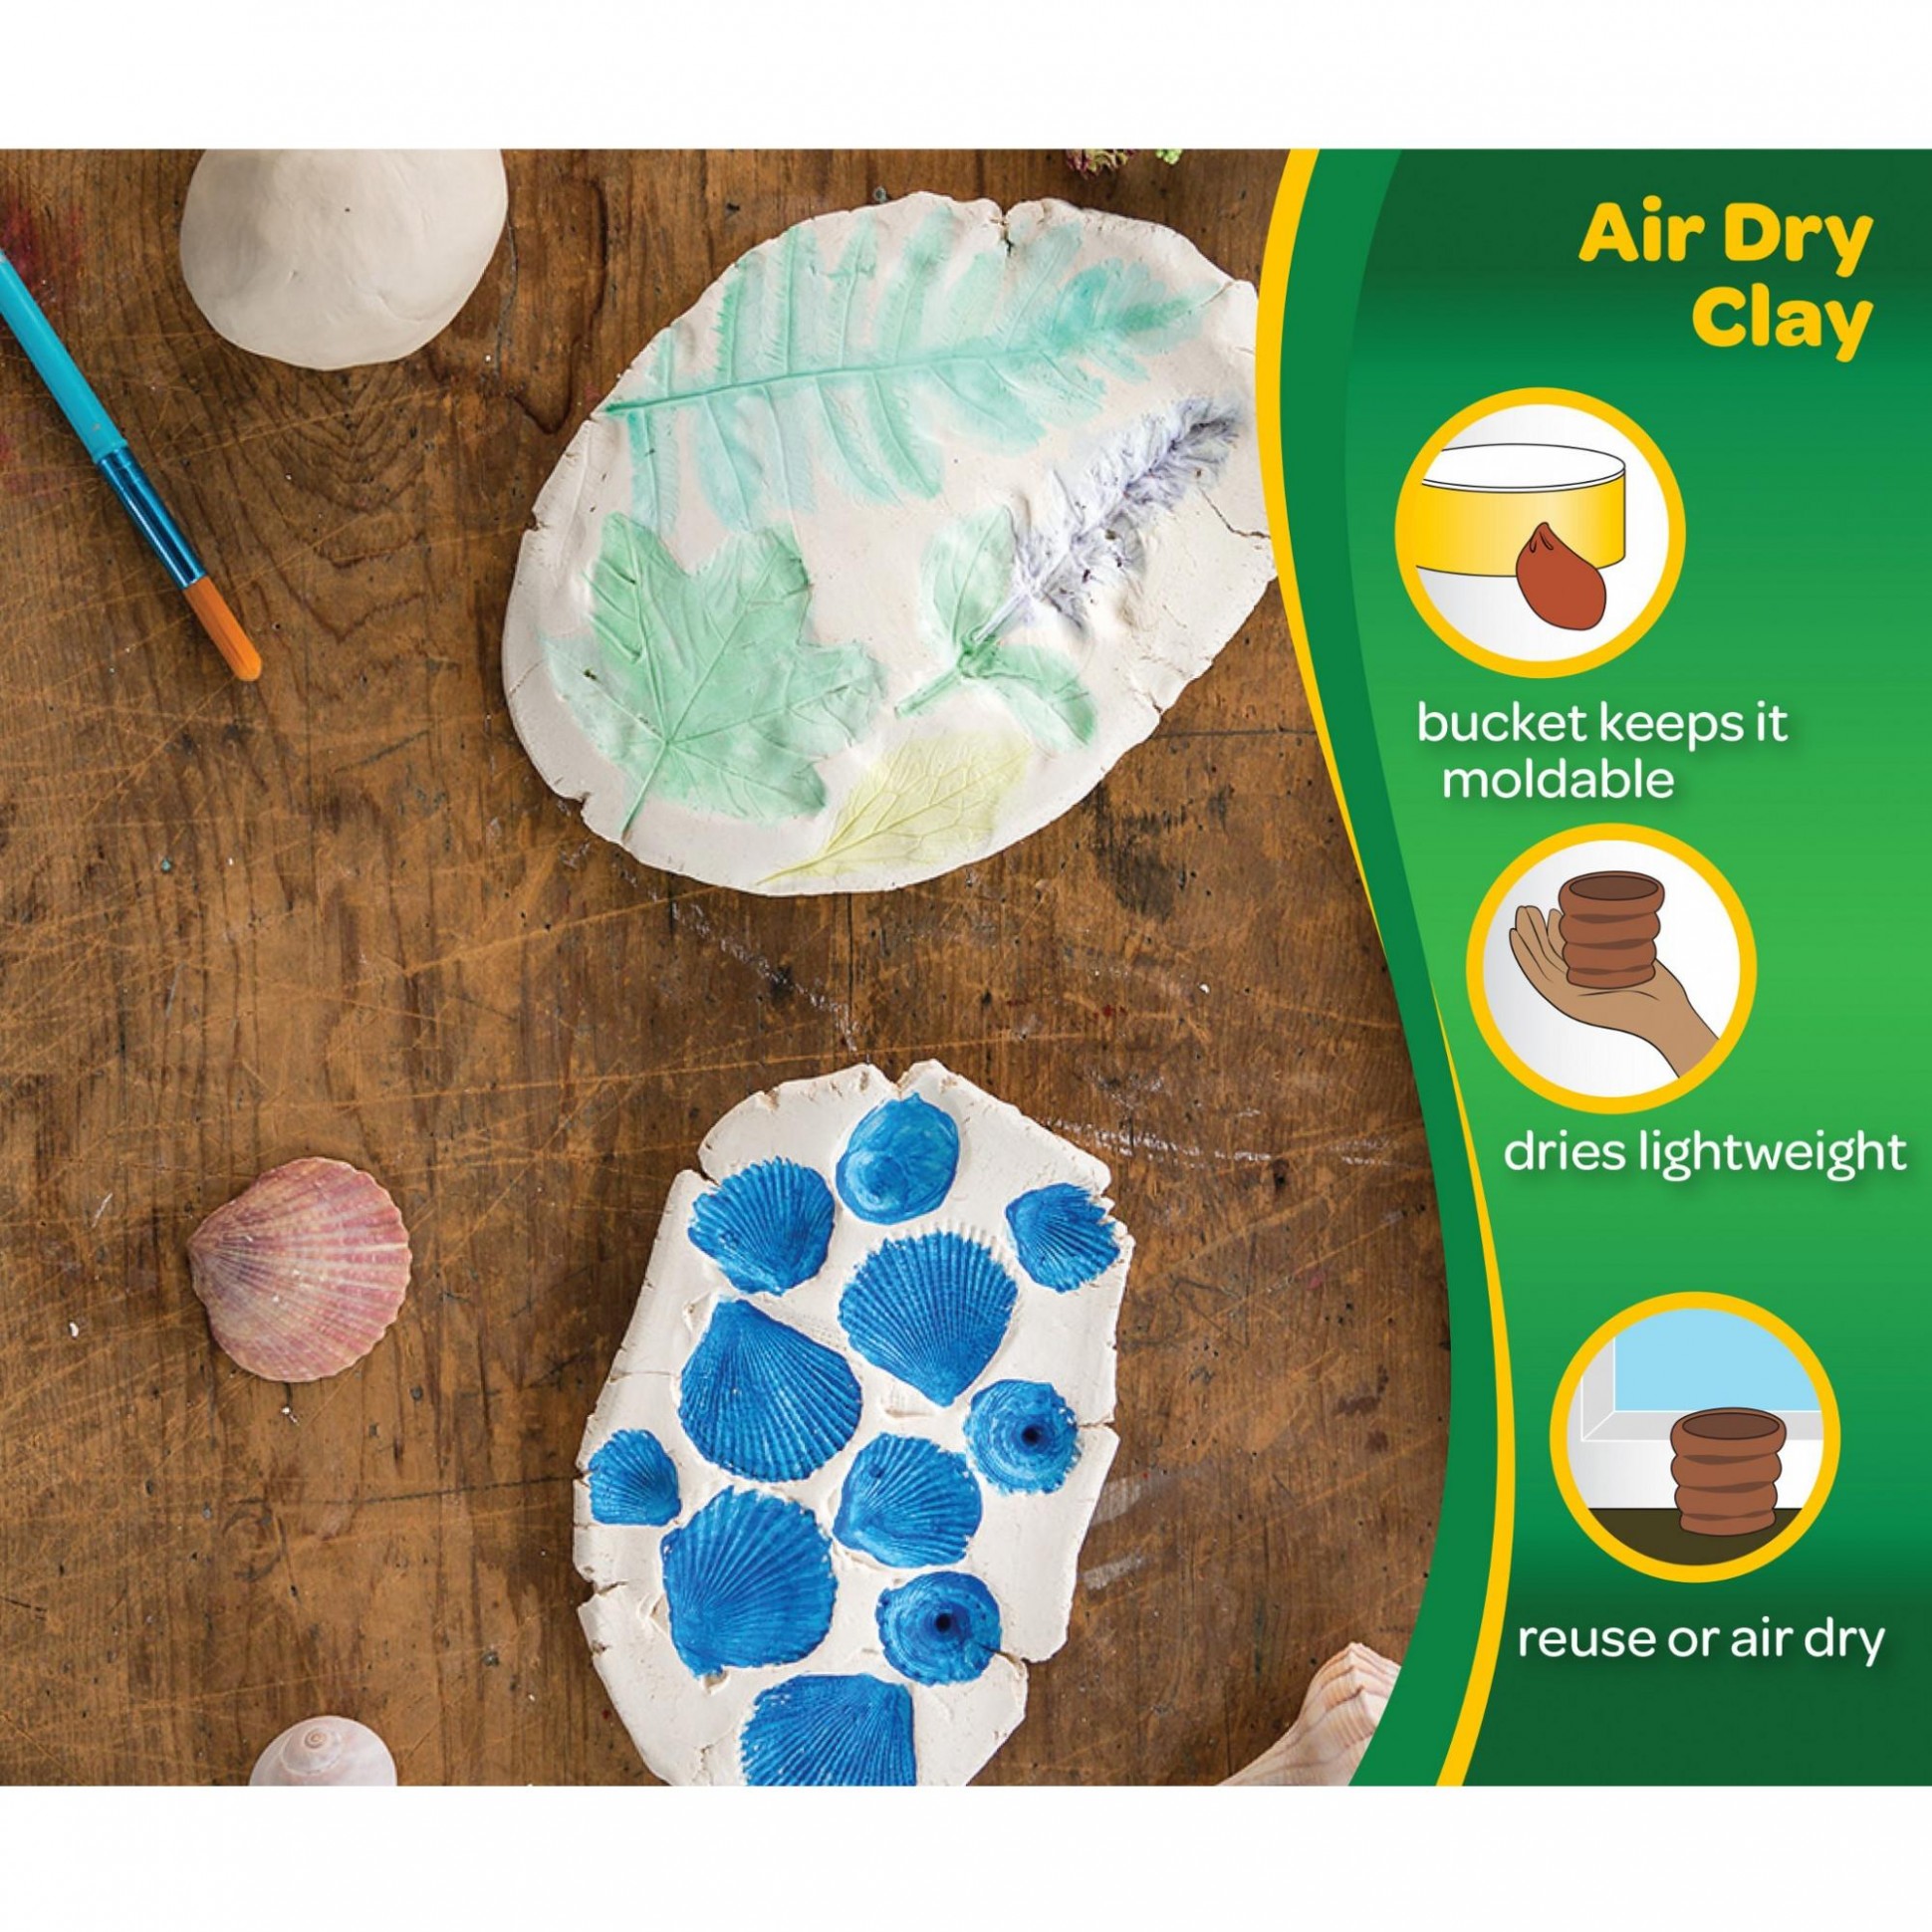 Crayola Air Dry Modeling Clay, 10.10 Lbs Bucket, No Bake Clay, Terra ..